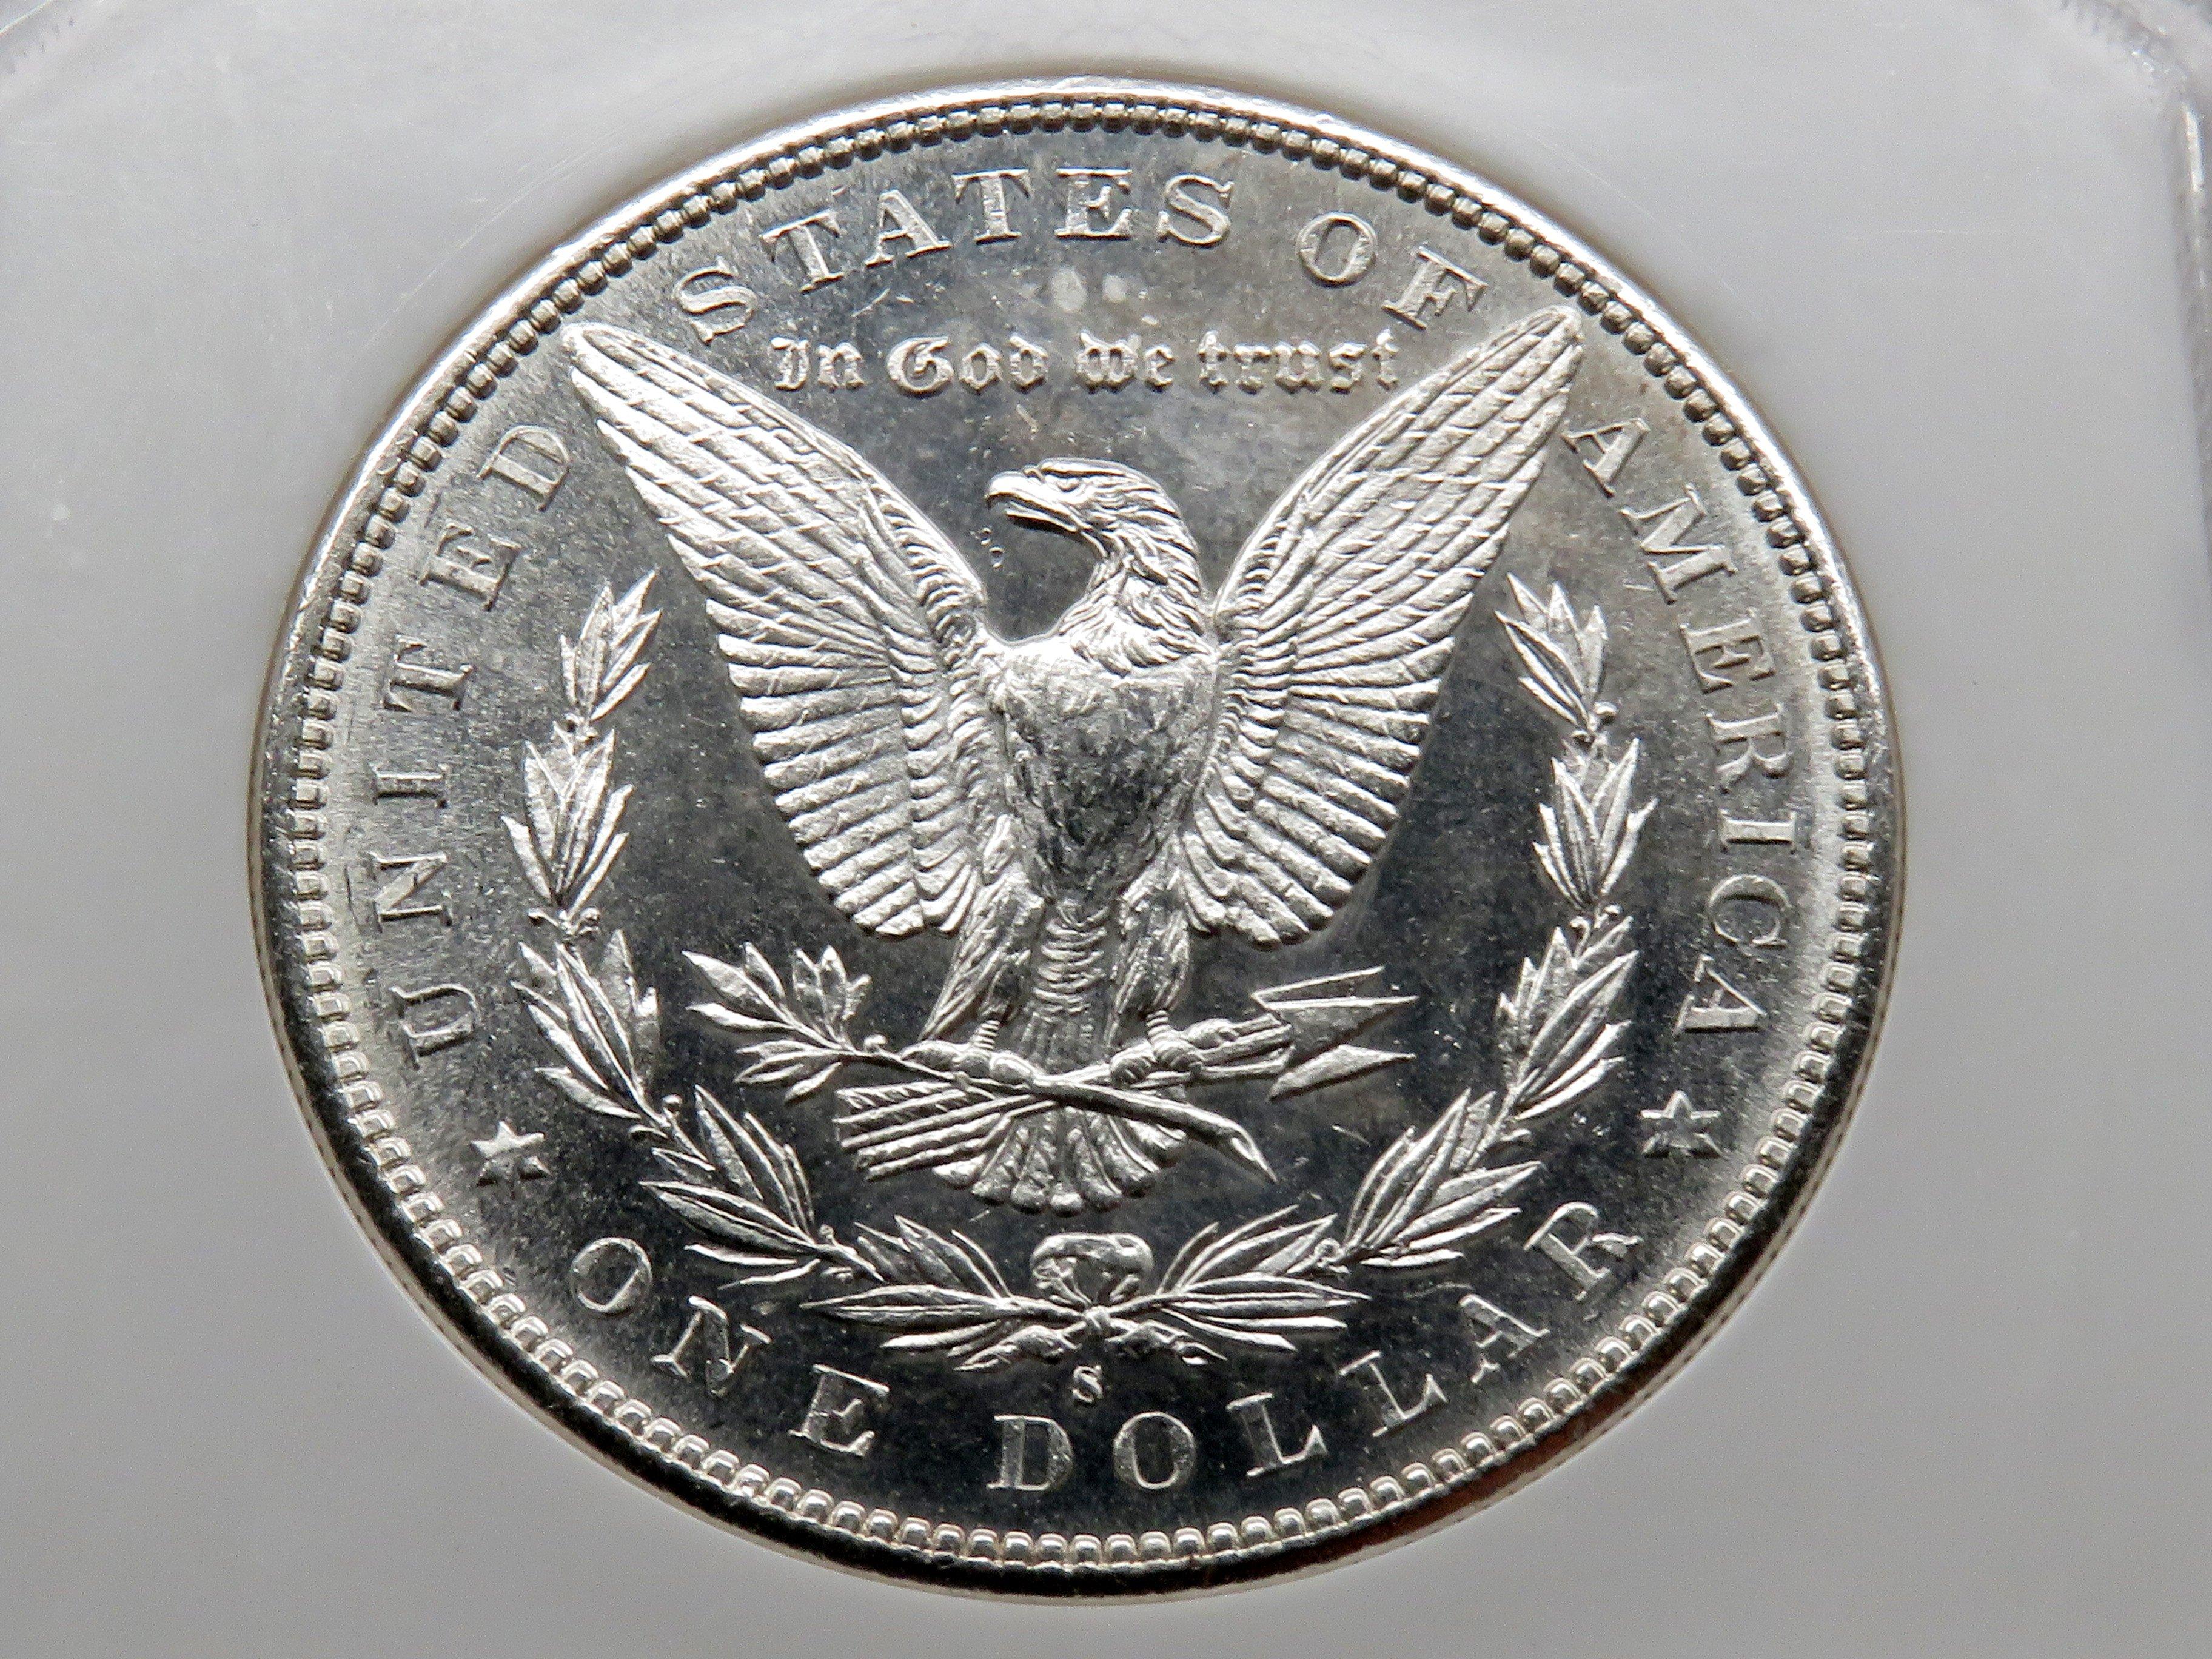 Morgan $ 1880-S PCI Mint State DMPL (Old Holder)